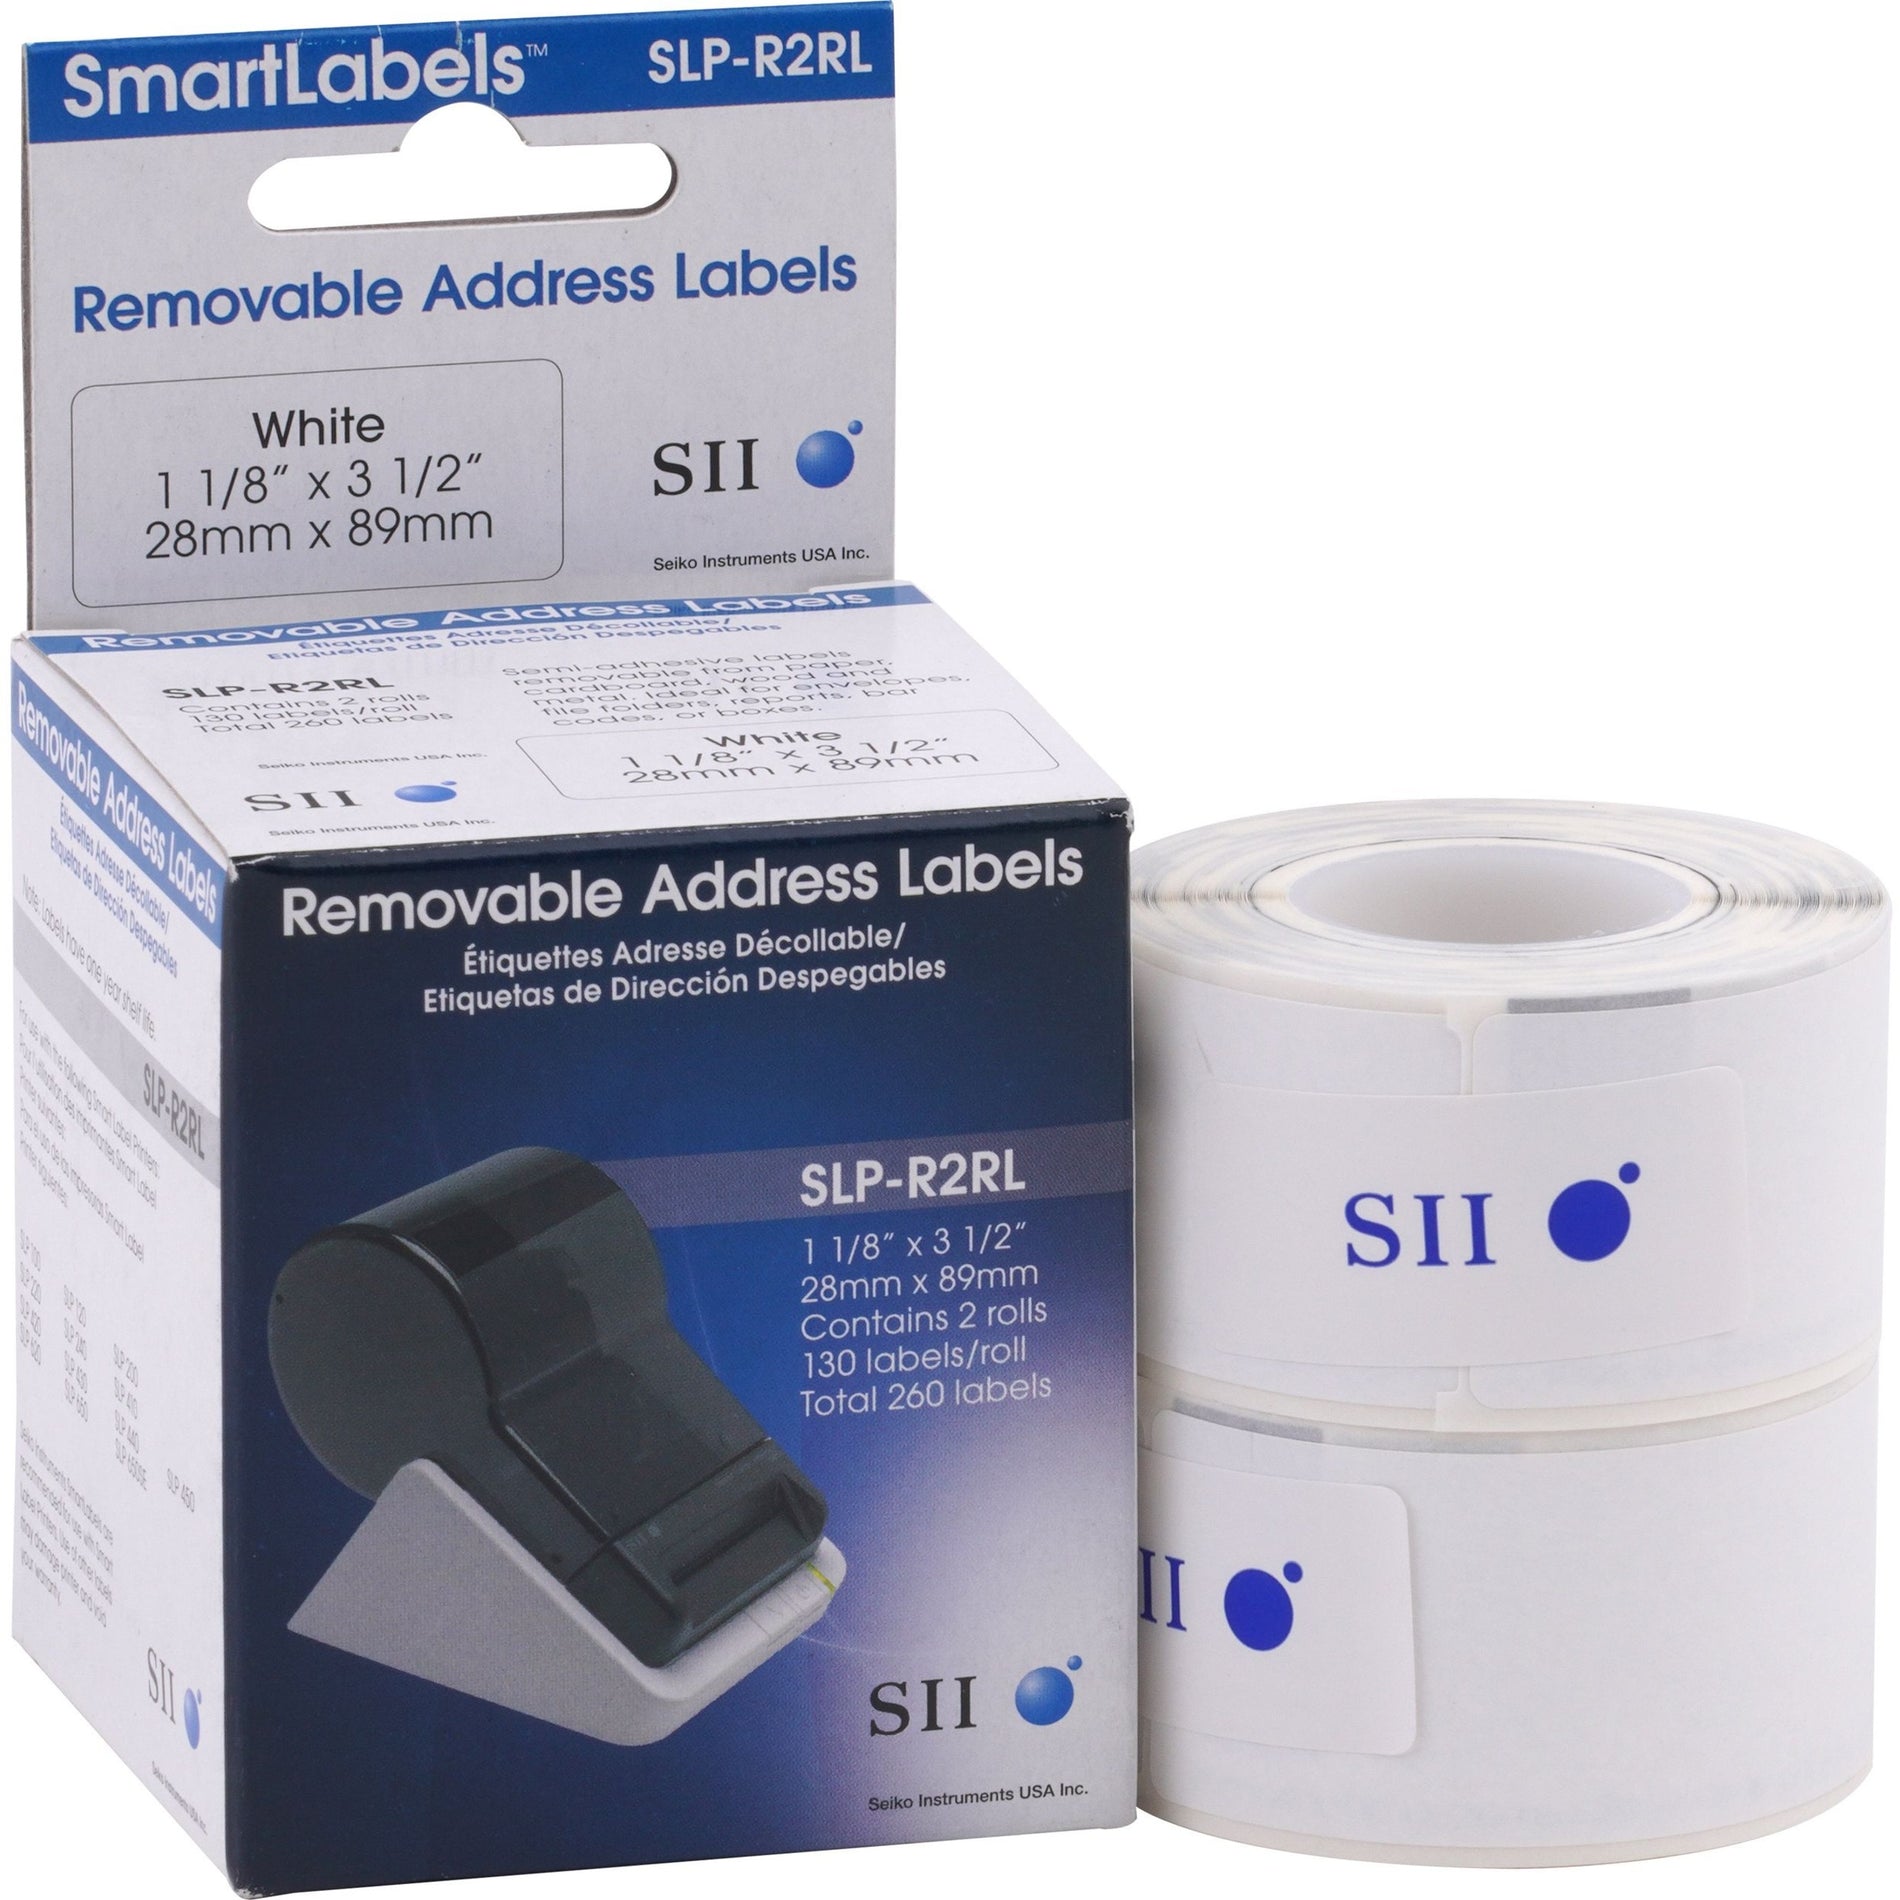 Seiko SLP-R2RL Removable Standard Address Label, Rectangle, 3 1/2" x 1 1/10", 130 Labels per Roll